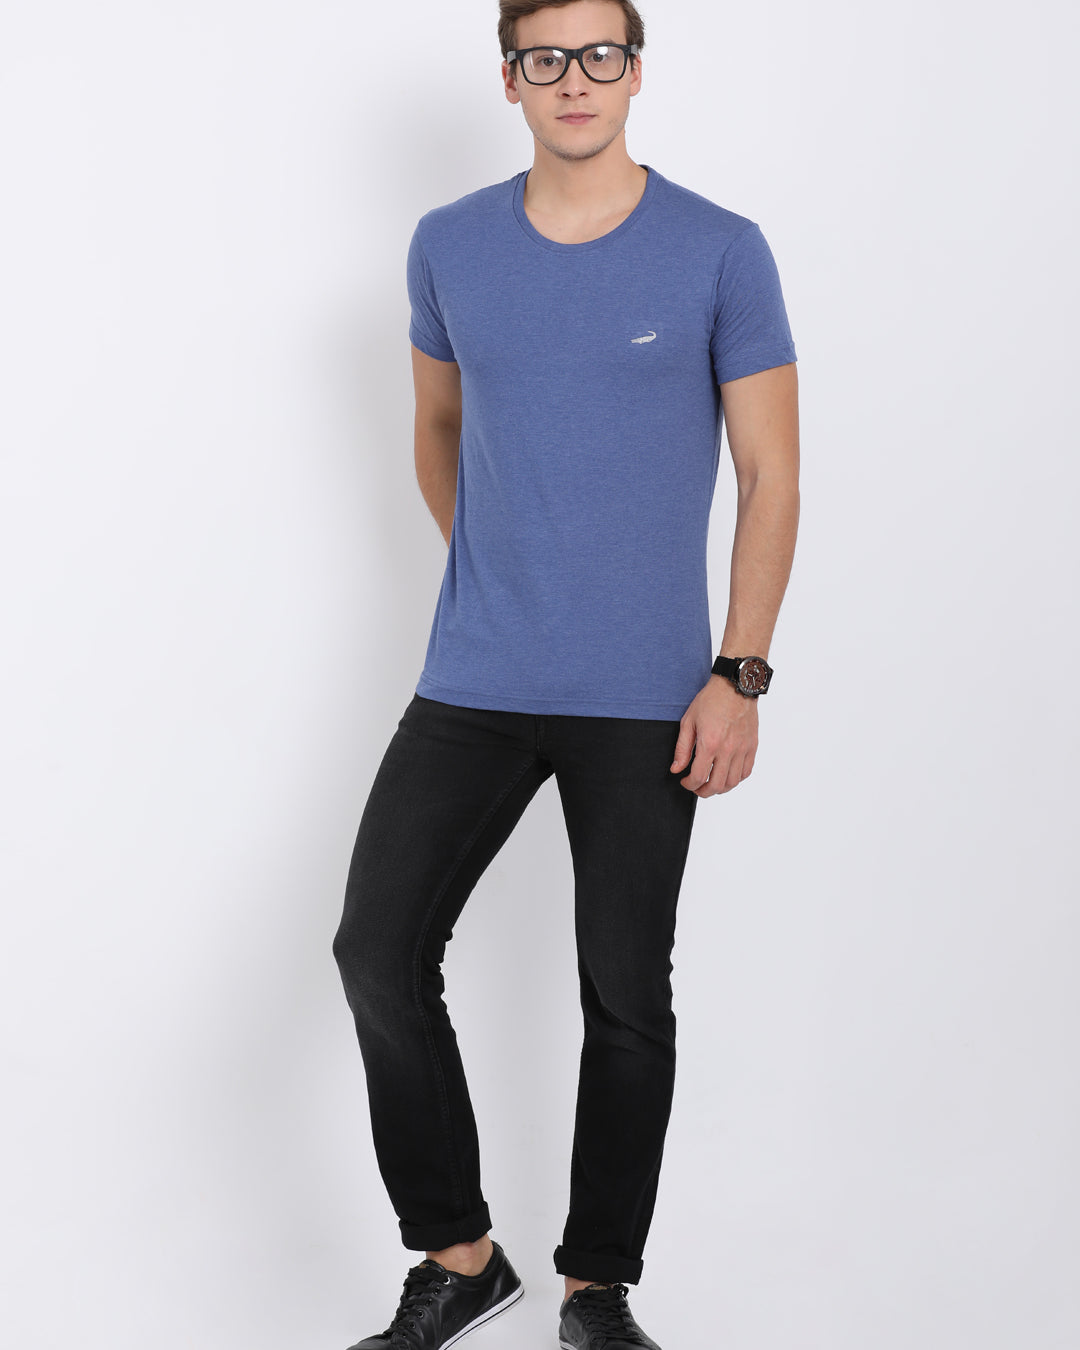 Men's Solid Round Neck Half Sleeve Cotton T-Shirt - BLUE MELANGE